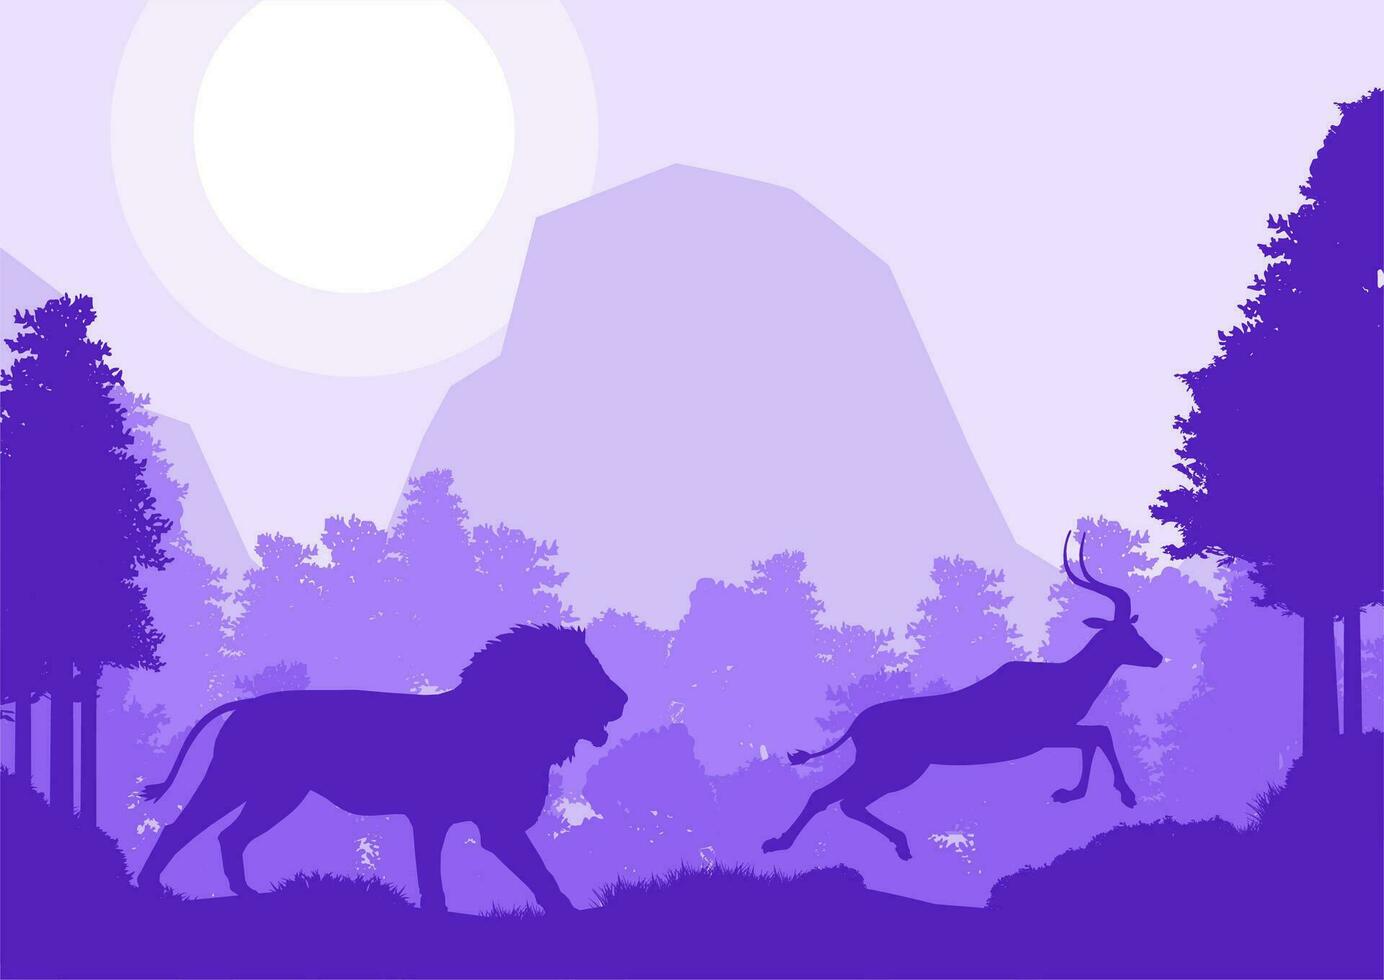 lion hunt impala deer animal silhouette forest mountain landscape flat design vector illustration